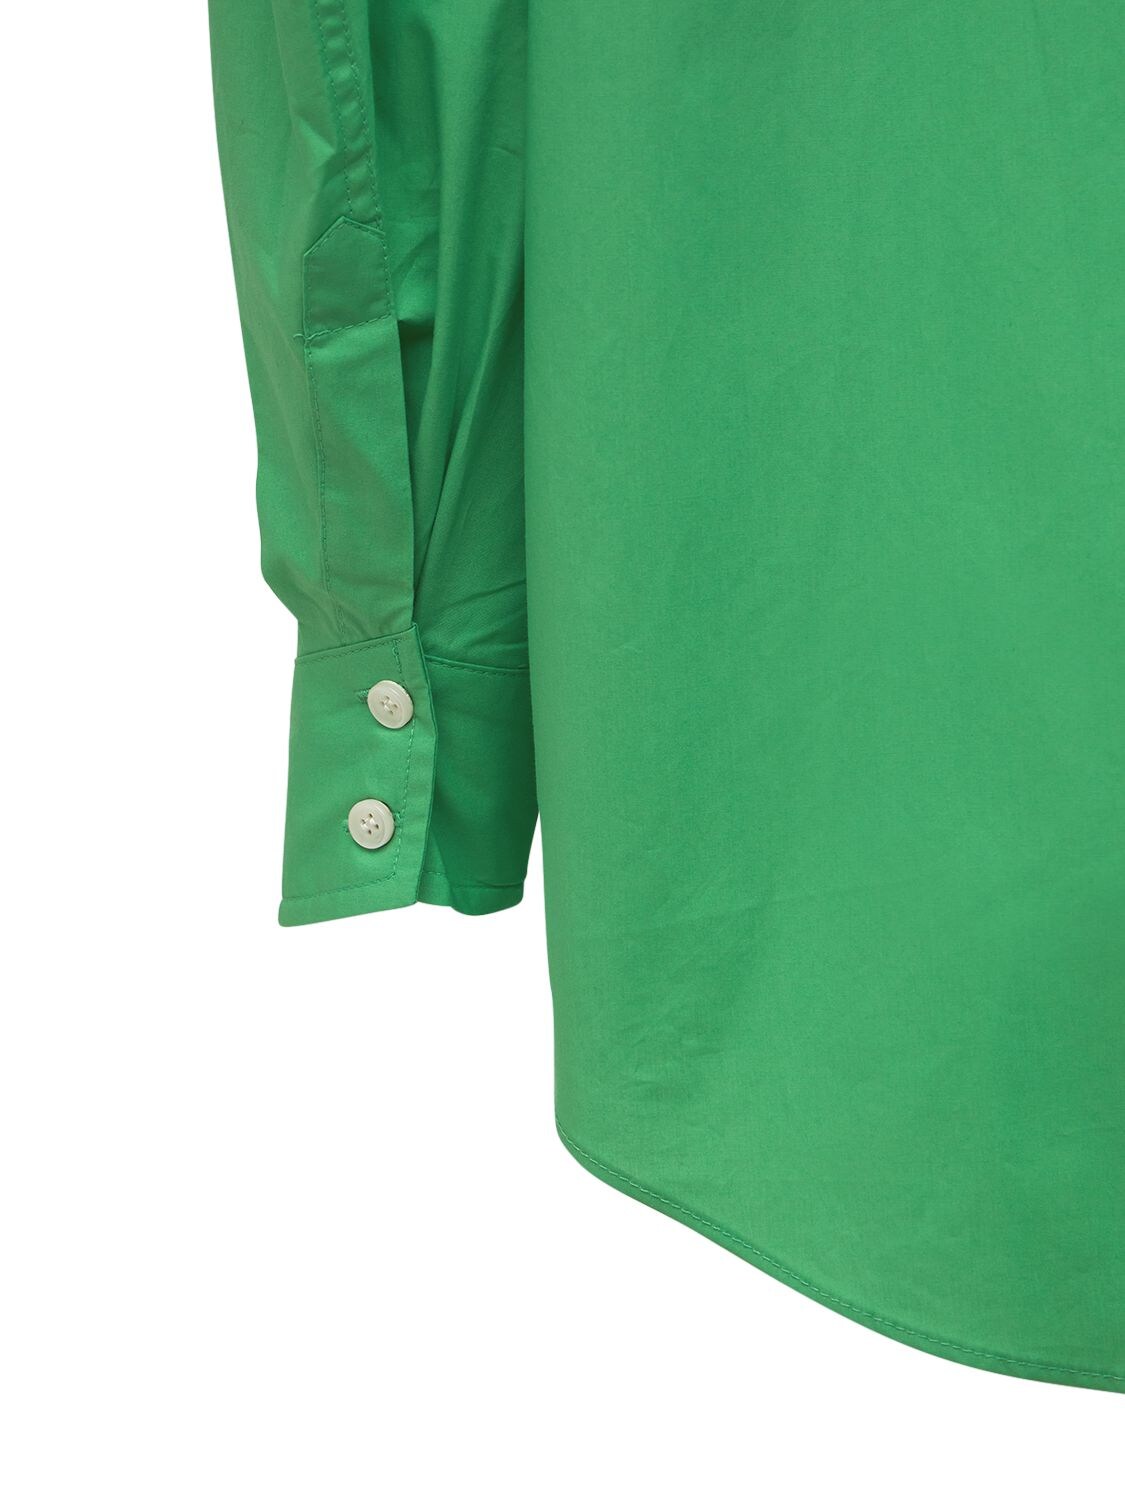 THE FRANKIE SHOP Melody Organic Cotton Shirt | Smart Closet